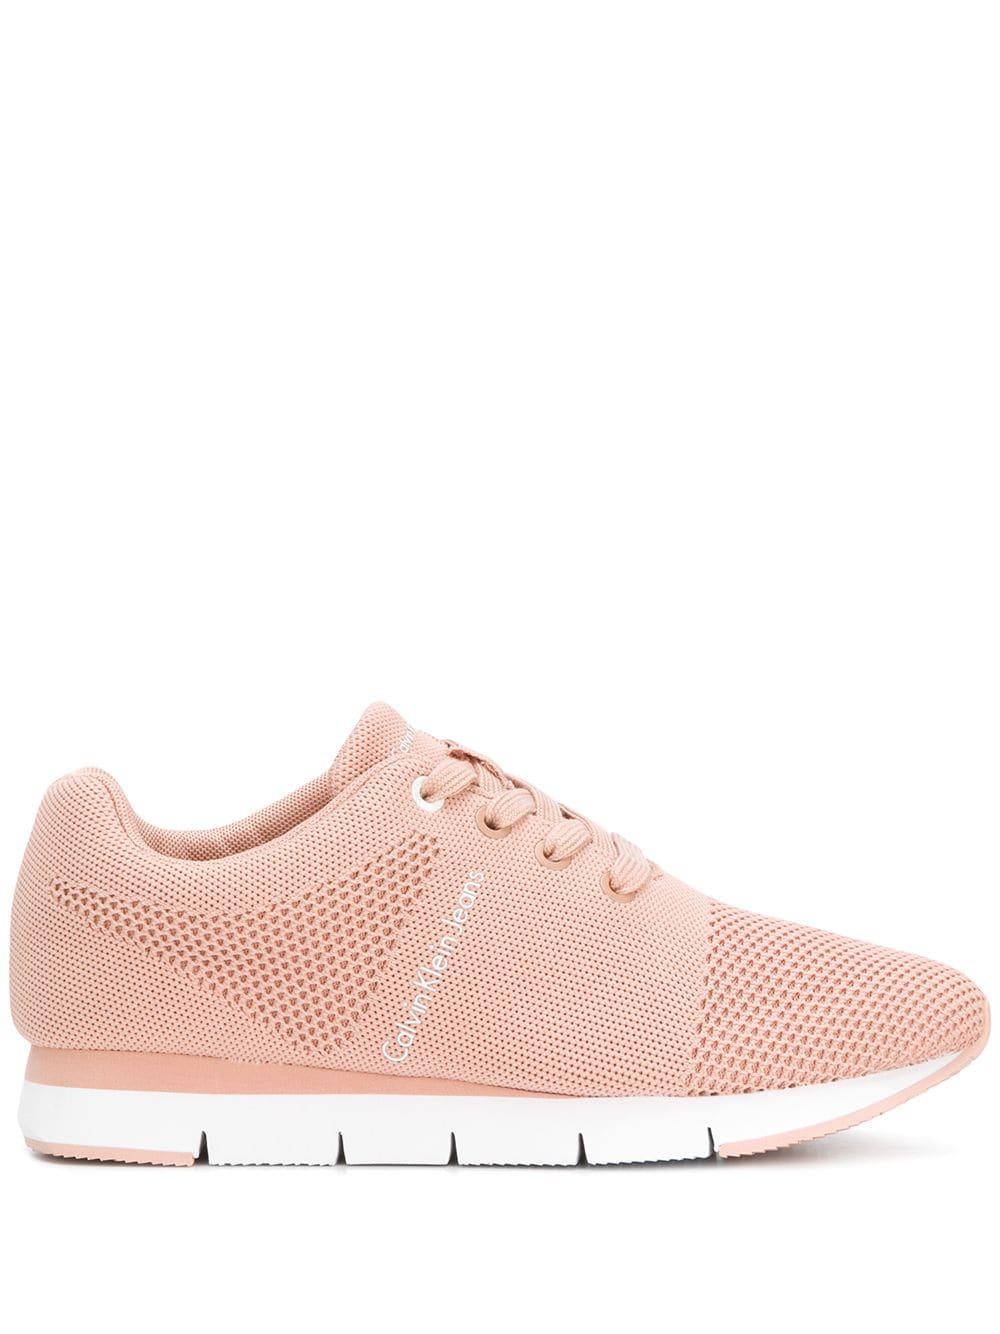 Calvin Klein Denim Tada Mesh Sneakers in Pink - Lyst